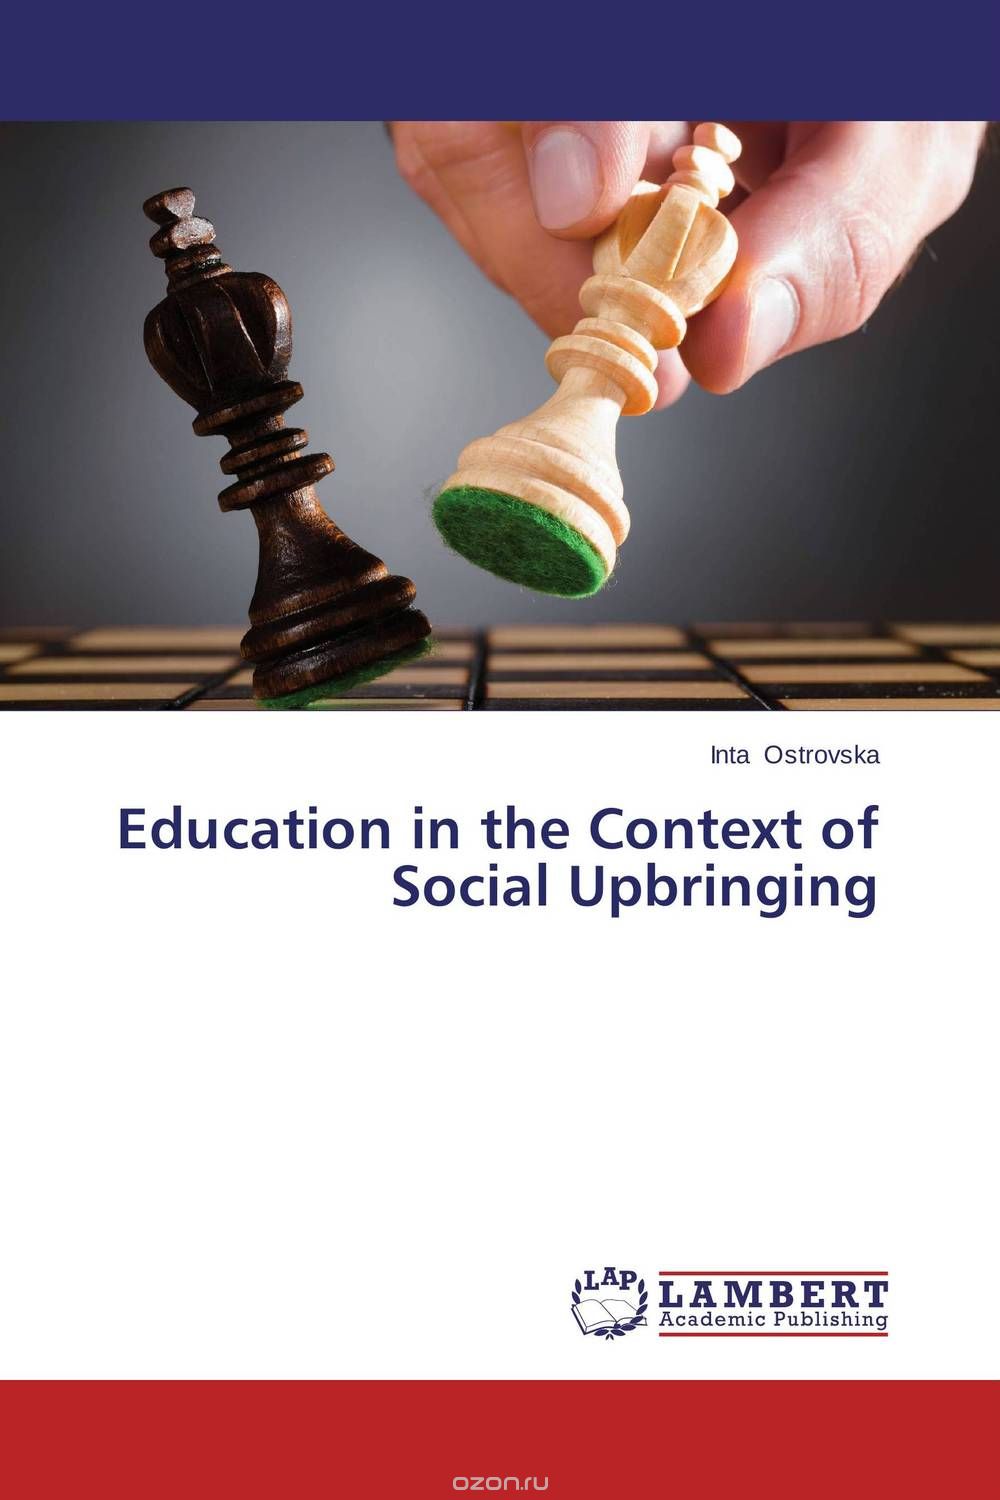 Скачать книгу "Education in the Context of Social Upbringing"